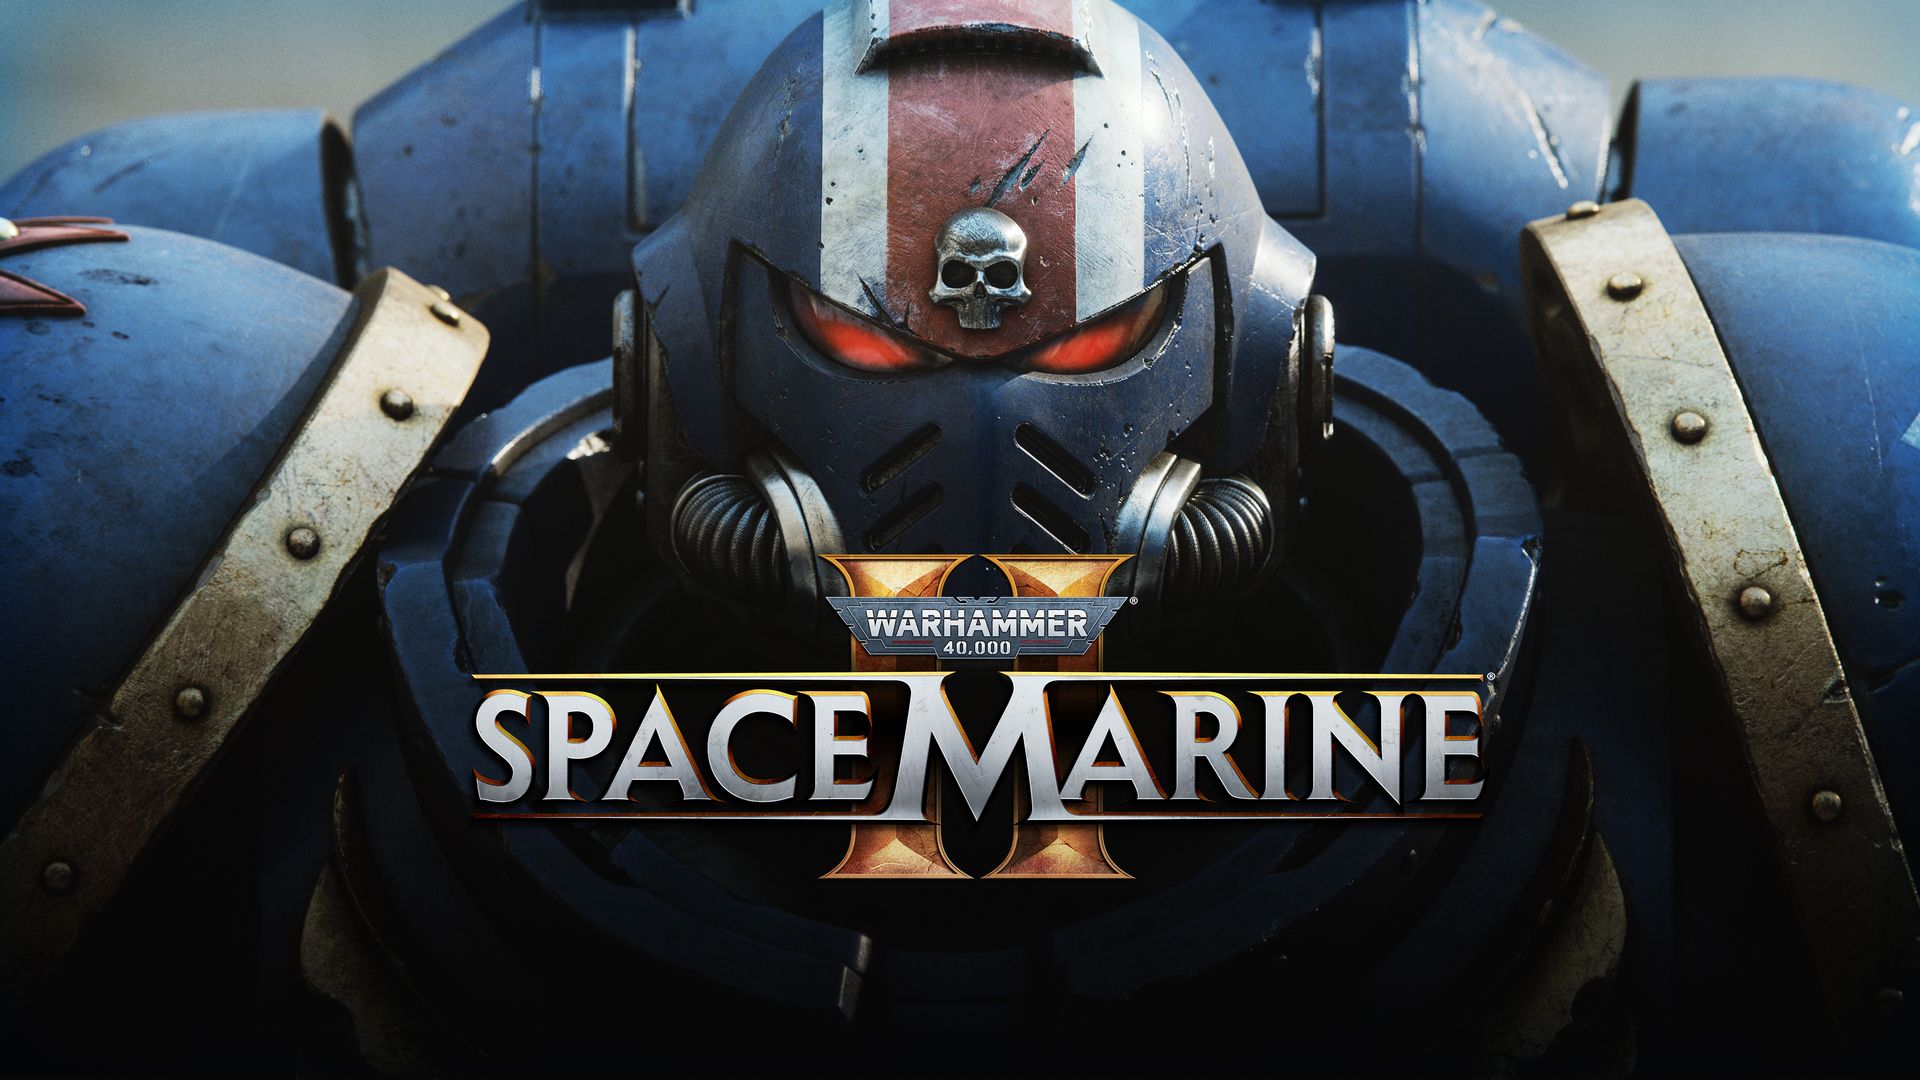 Download Warhammer 40,000: Space Marine 2 Xbox Series X & S FULL VERSION